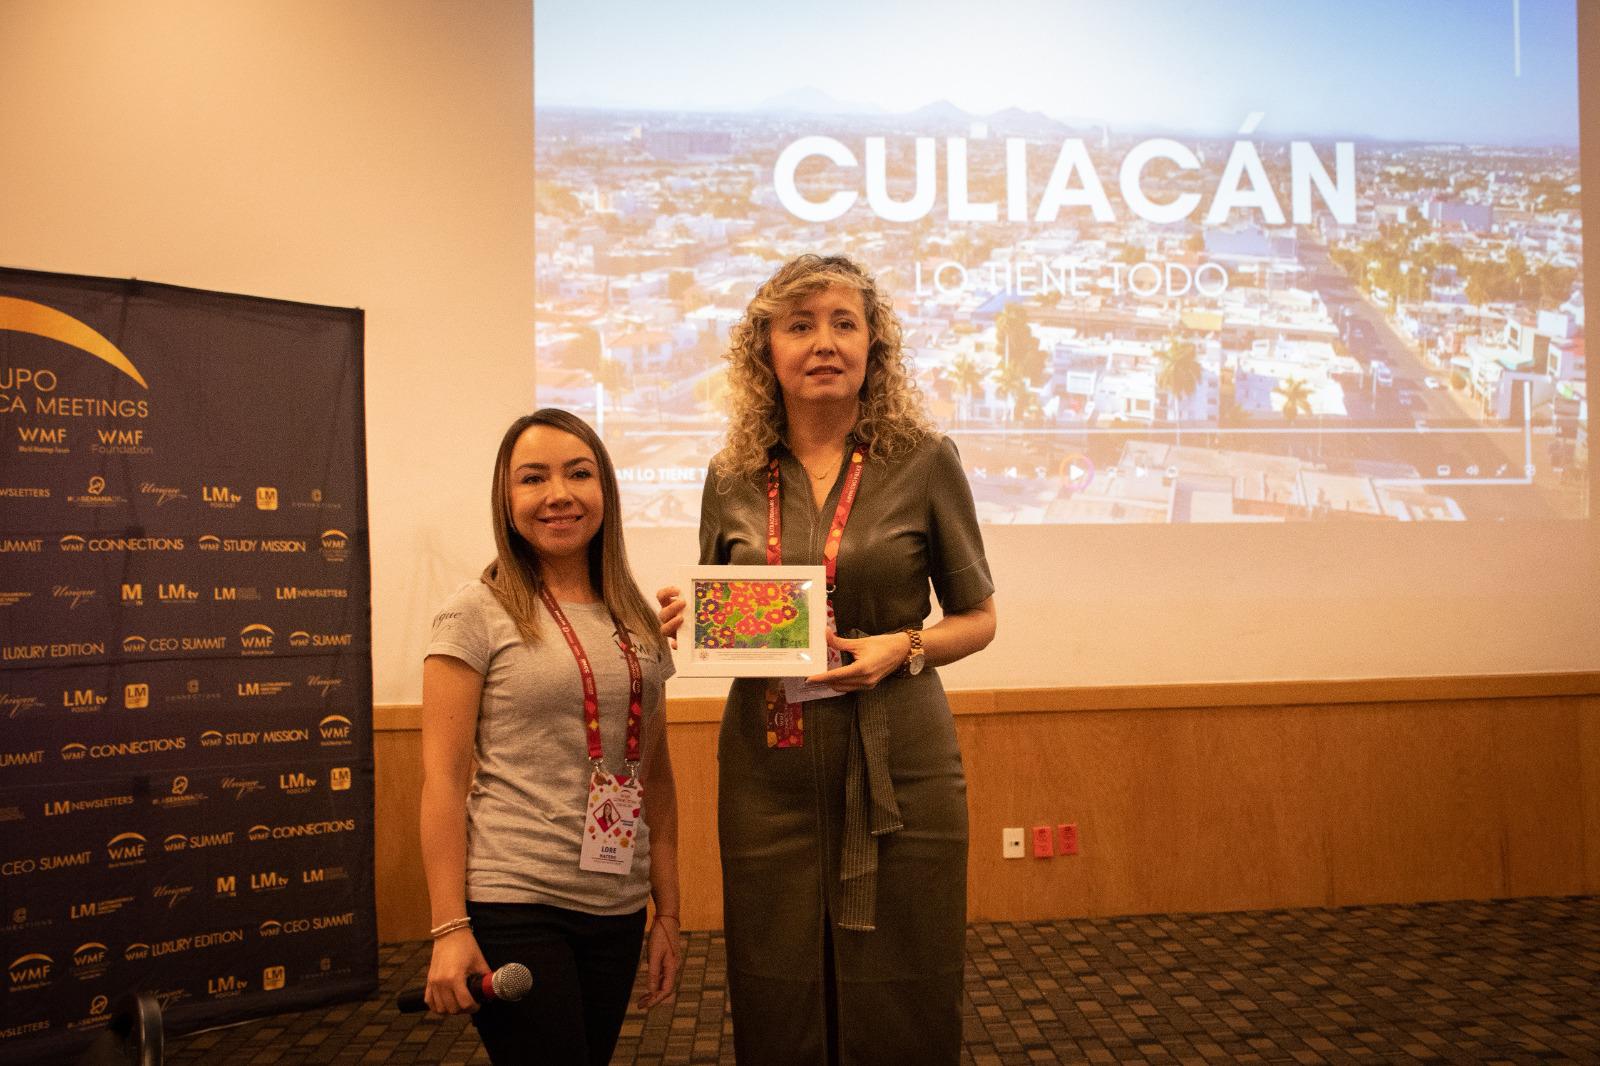 $!‘World Meetings Forum Connections Culiacán’ llega para impulsar industria de reuniones